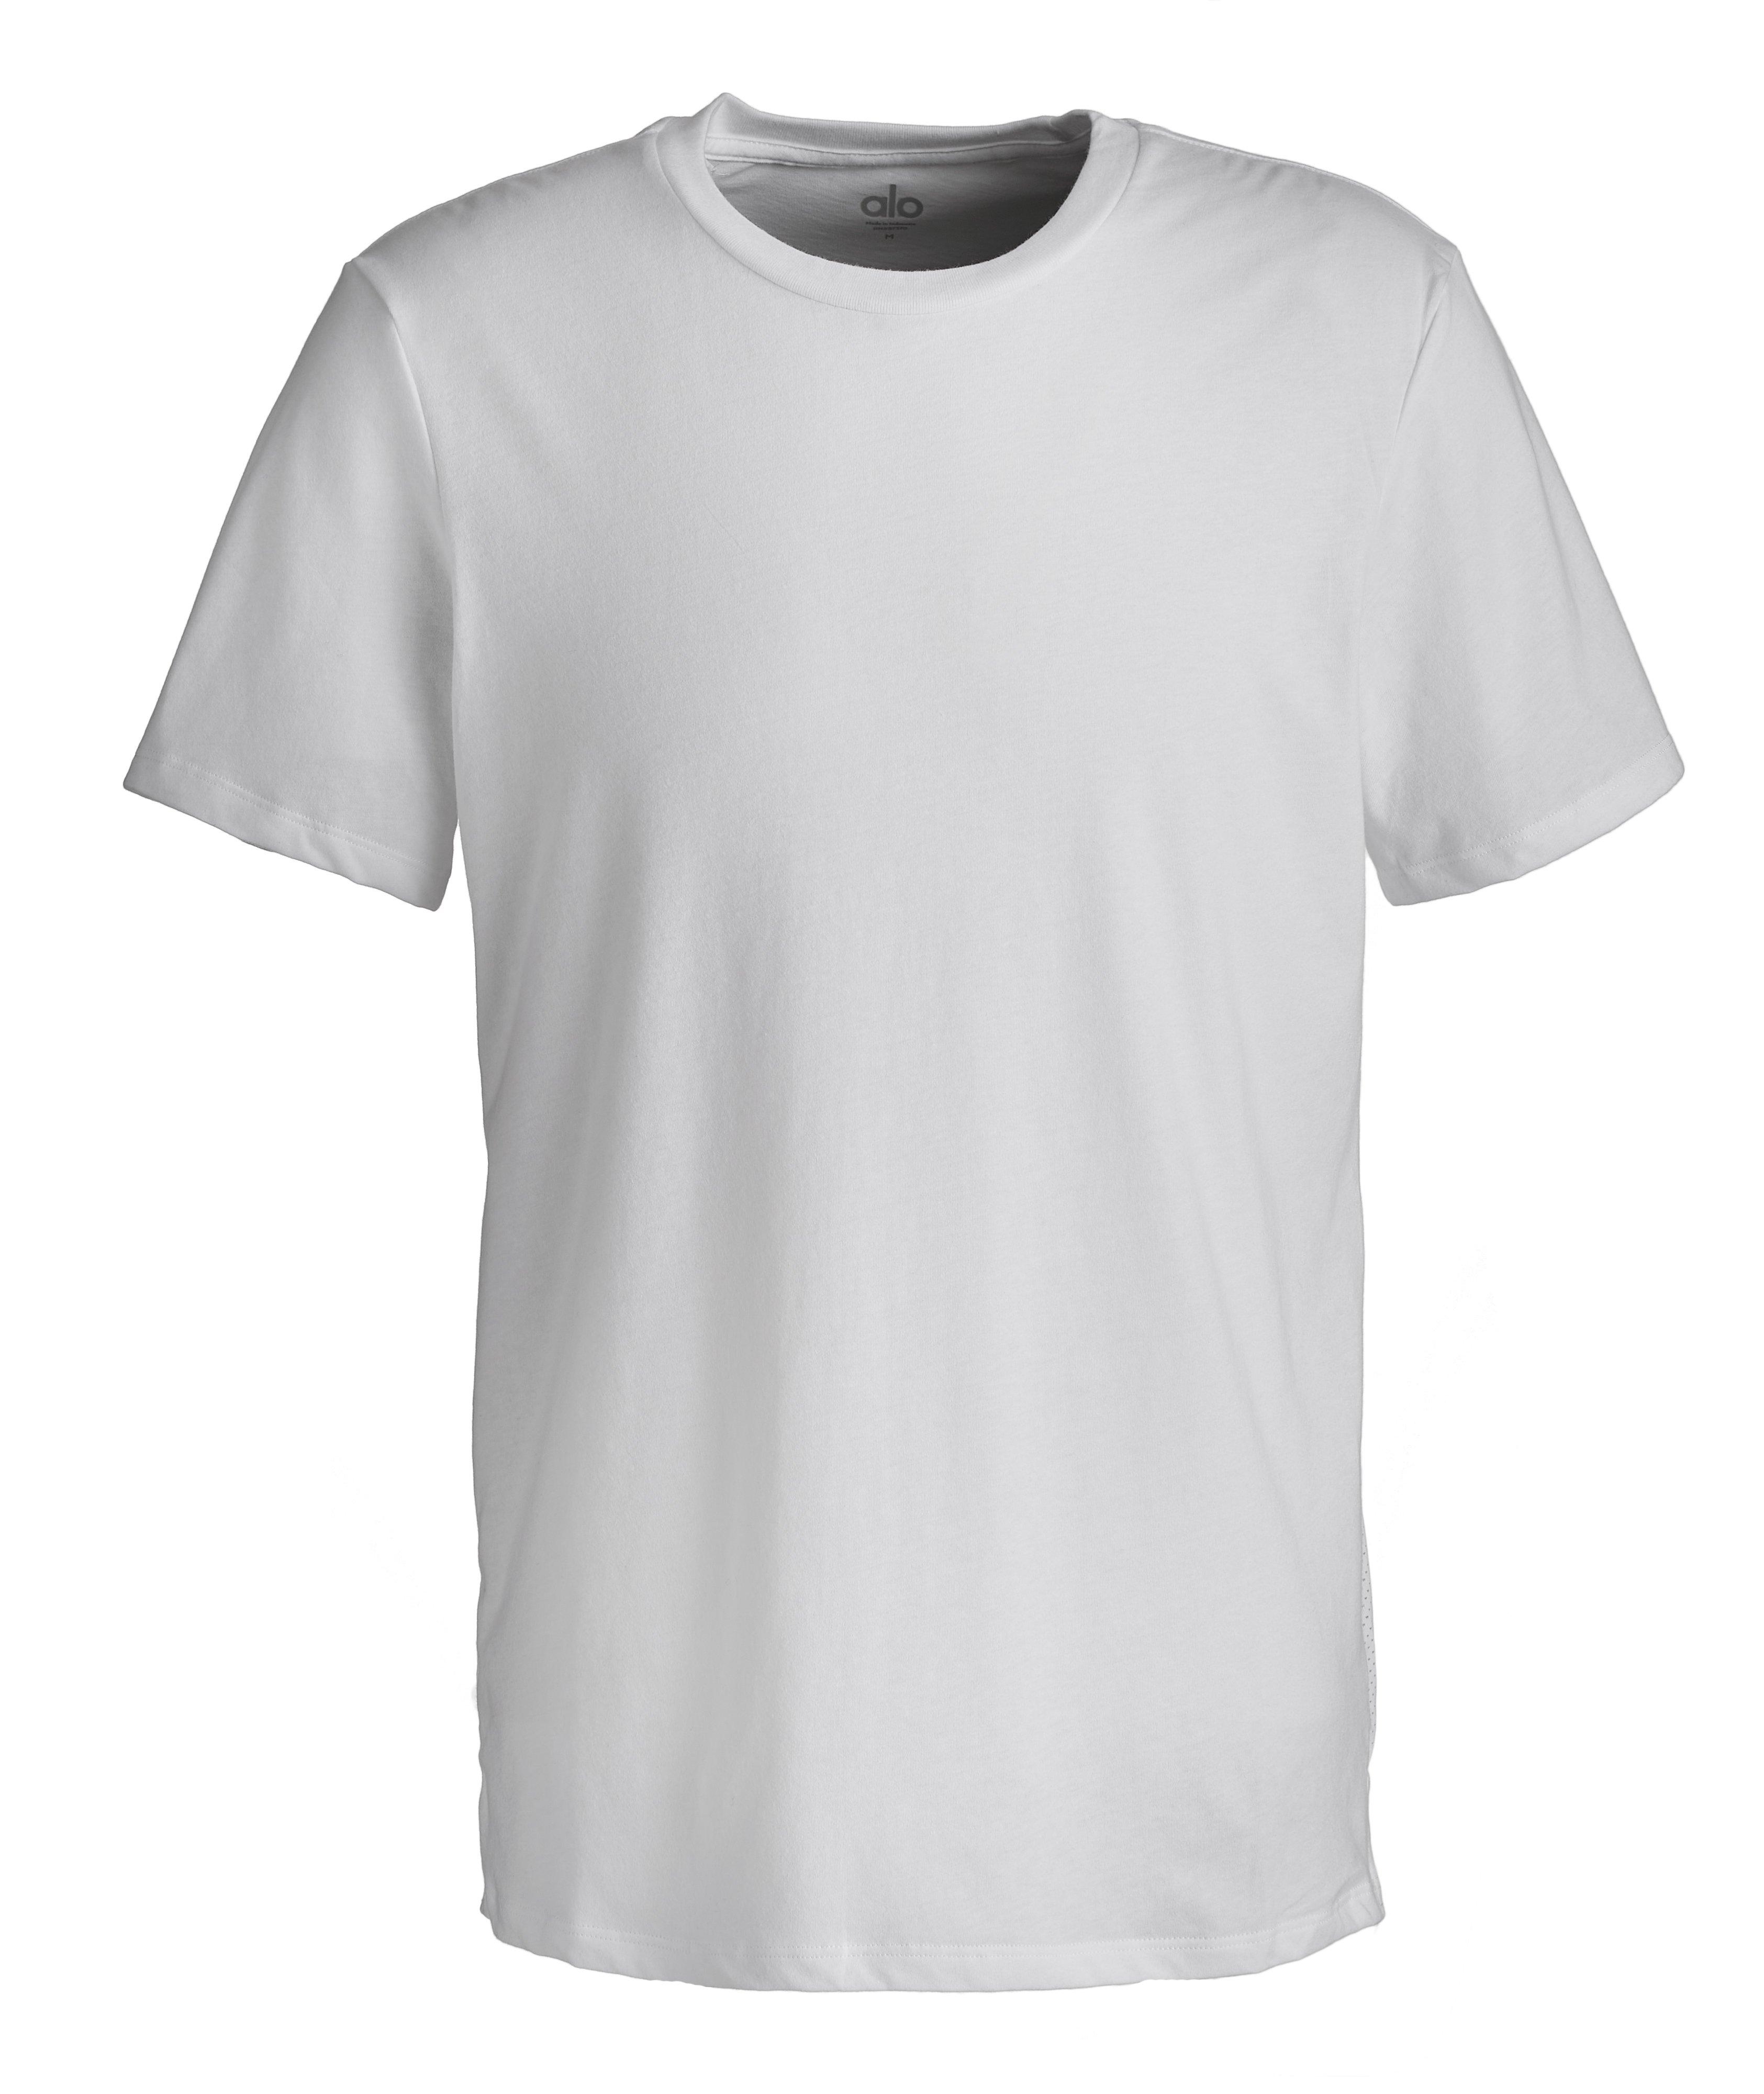 Airwave Mesh-Back T-Shirt image 0